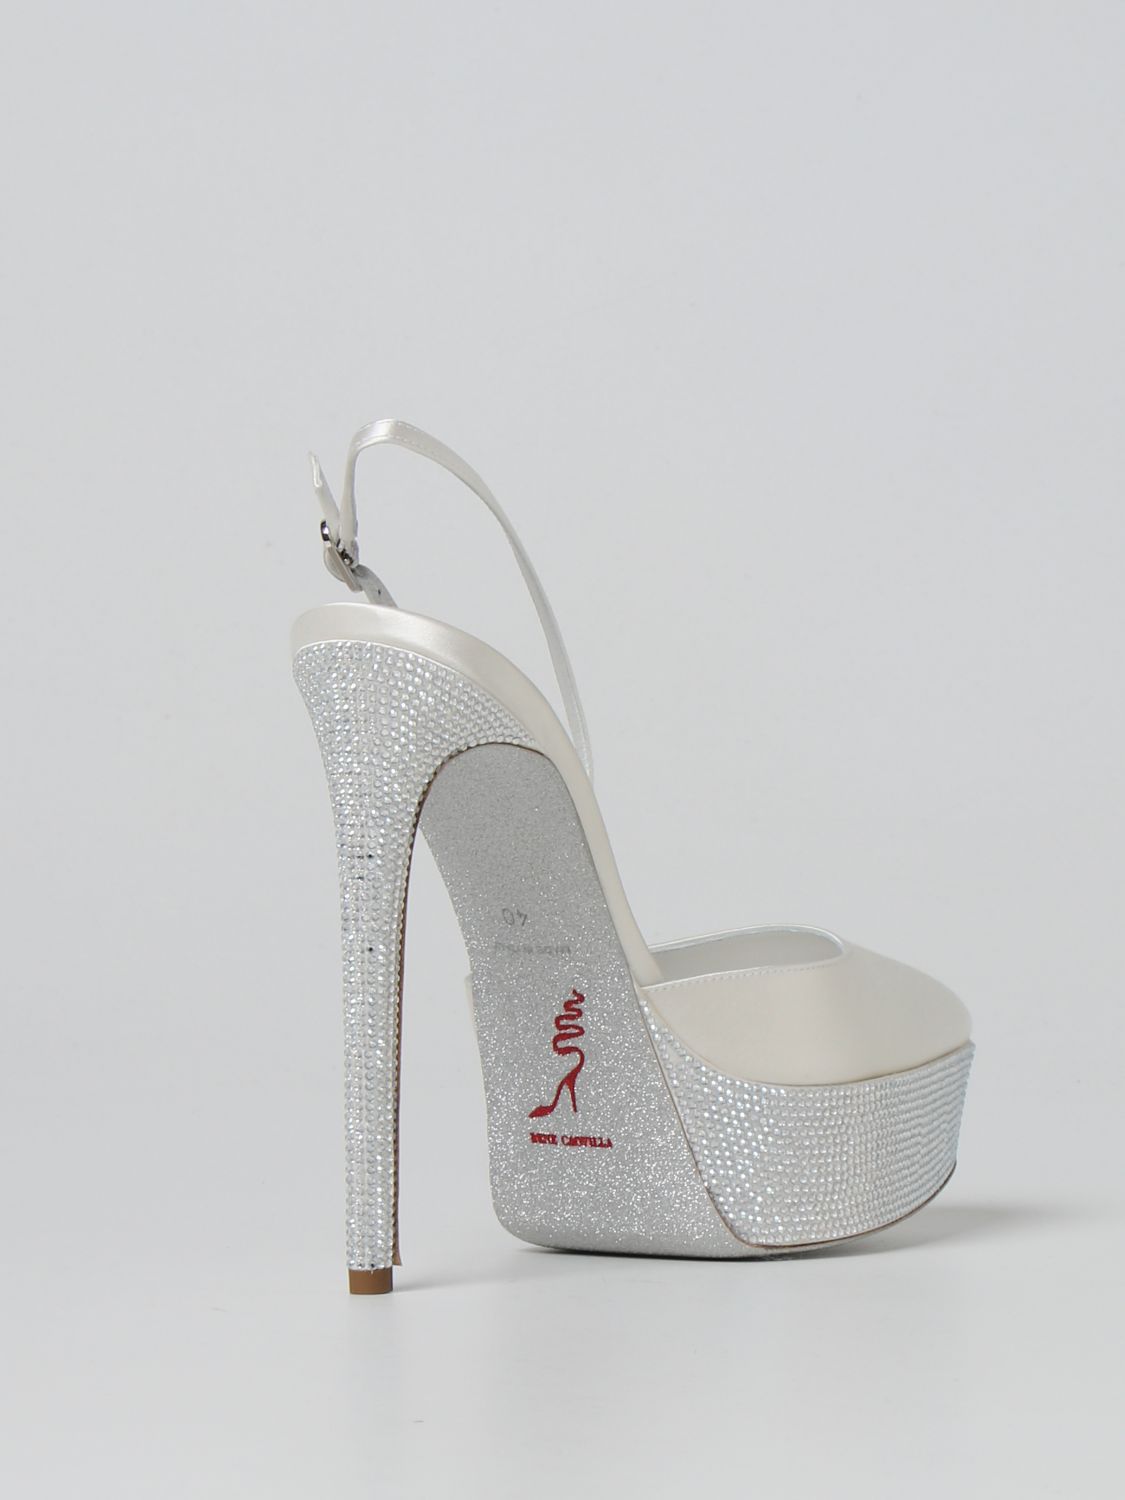 Rene Caovilla Outlet: high heel shoes for woman - White | Rene Caovilla ...